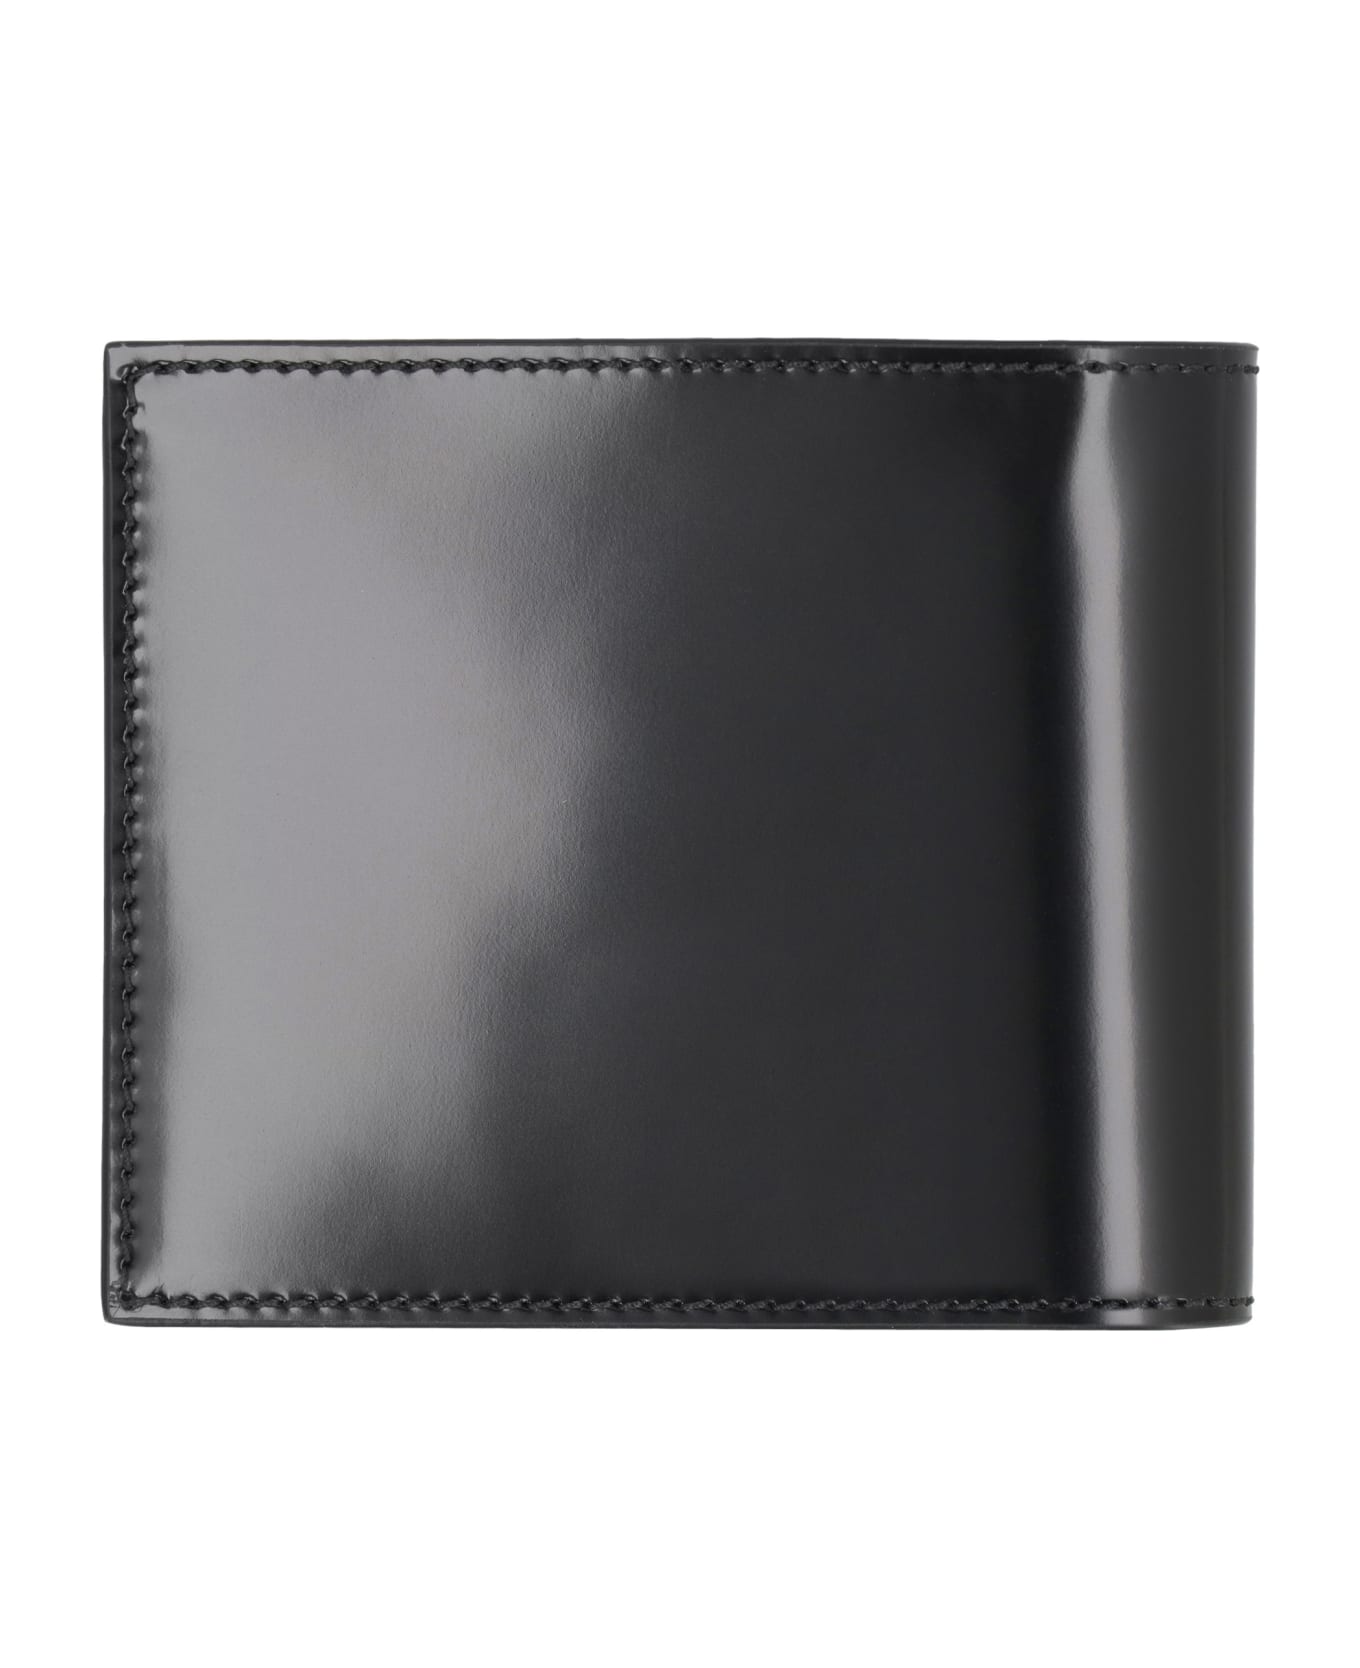 Ferragamo Leather Flap-over Wallet - black